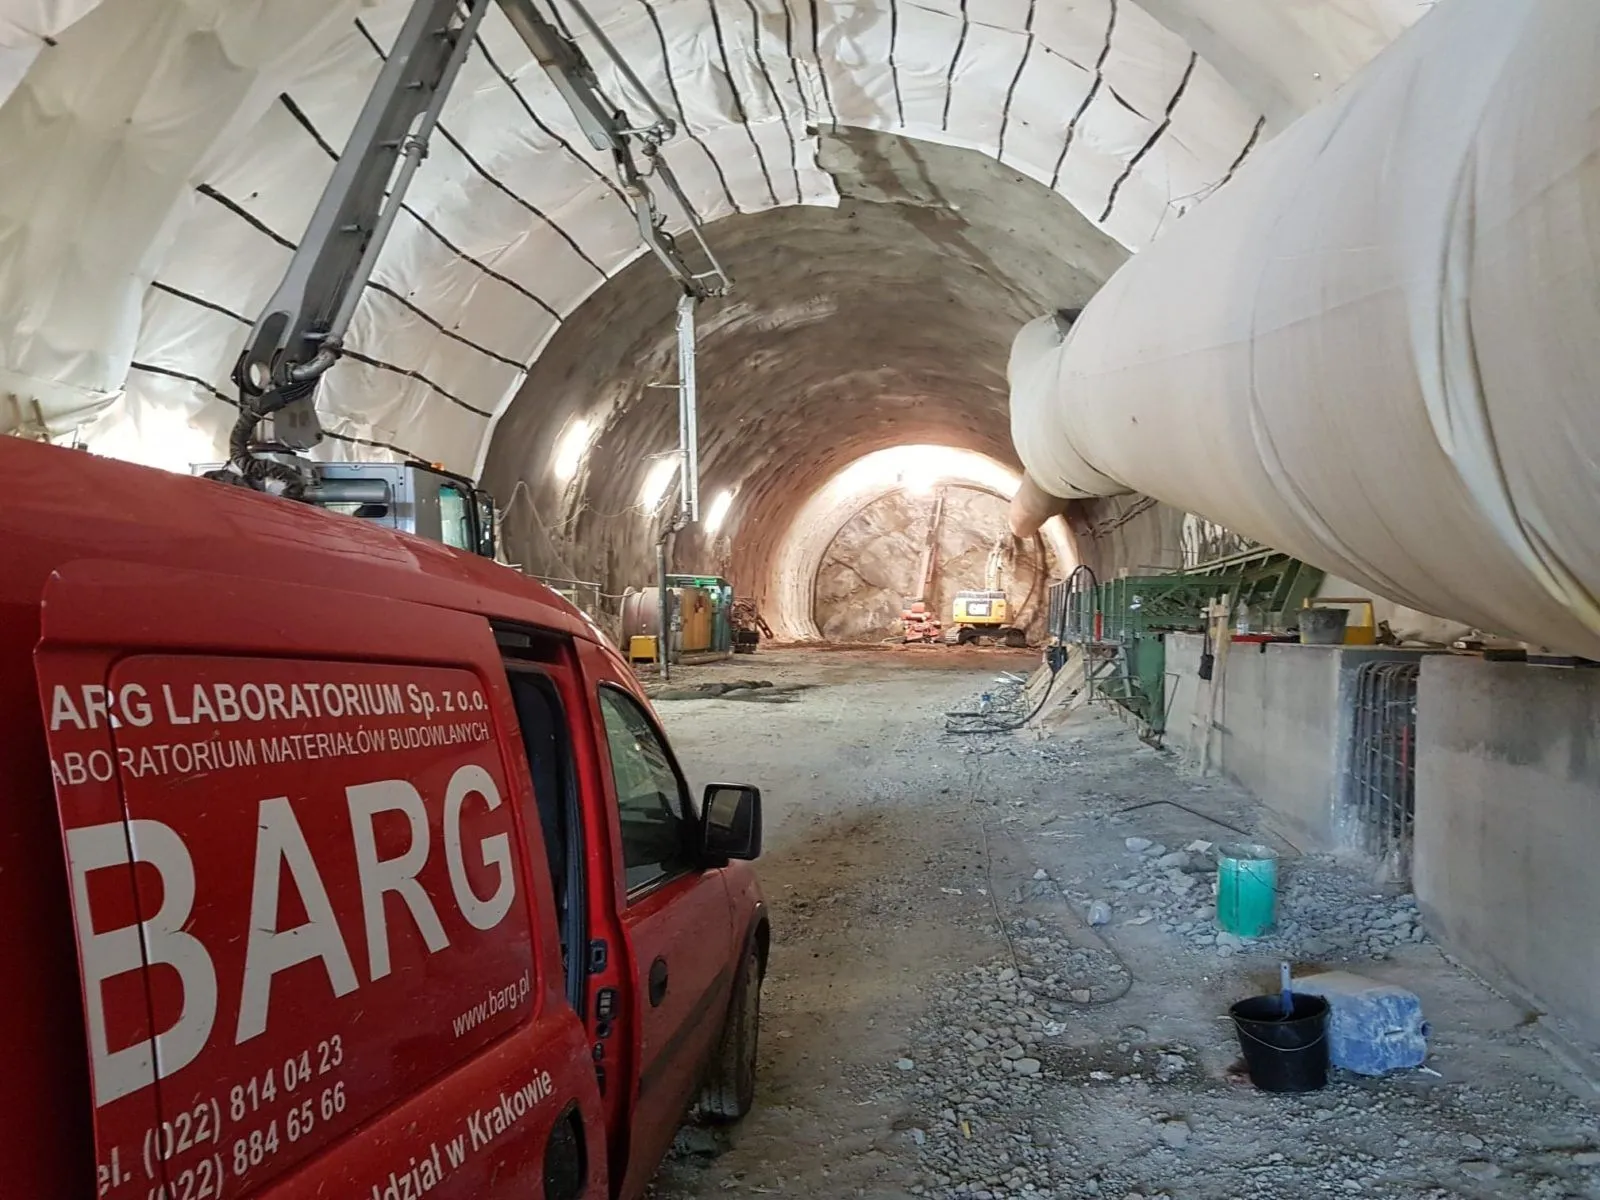 Budowa tunelu na Zakopiance